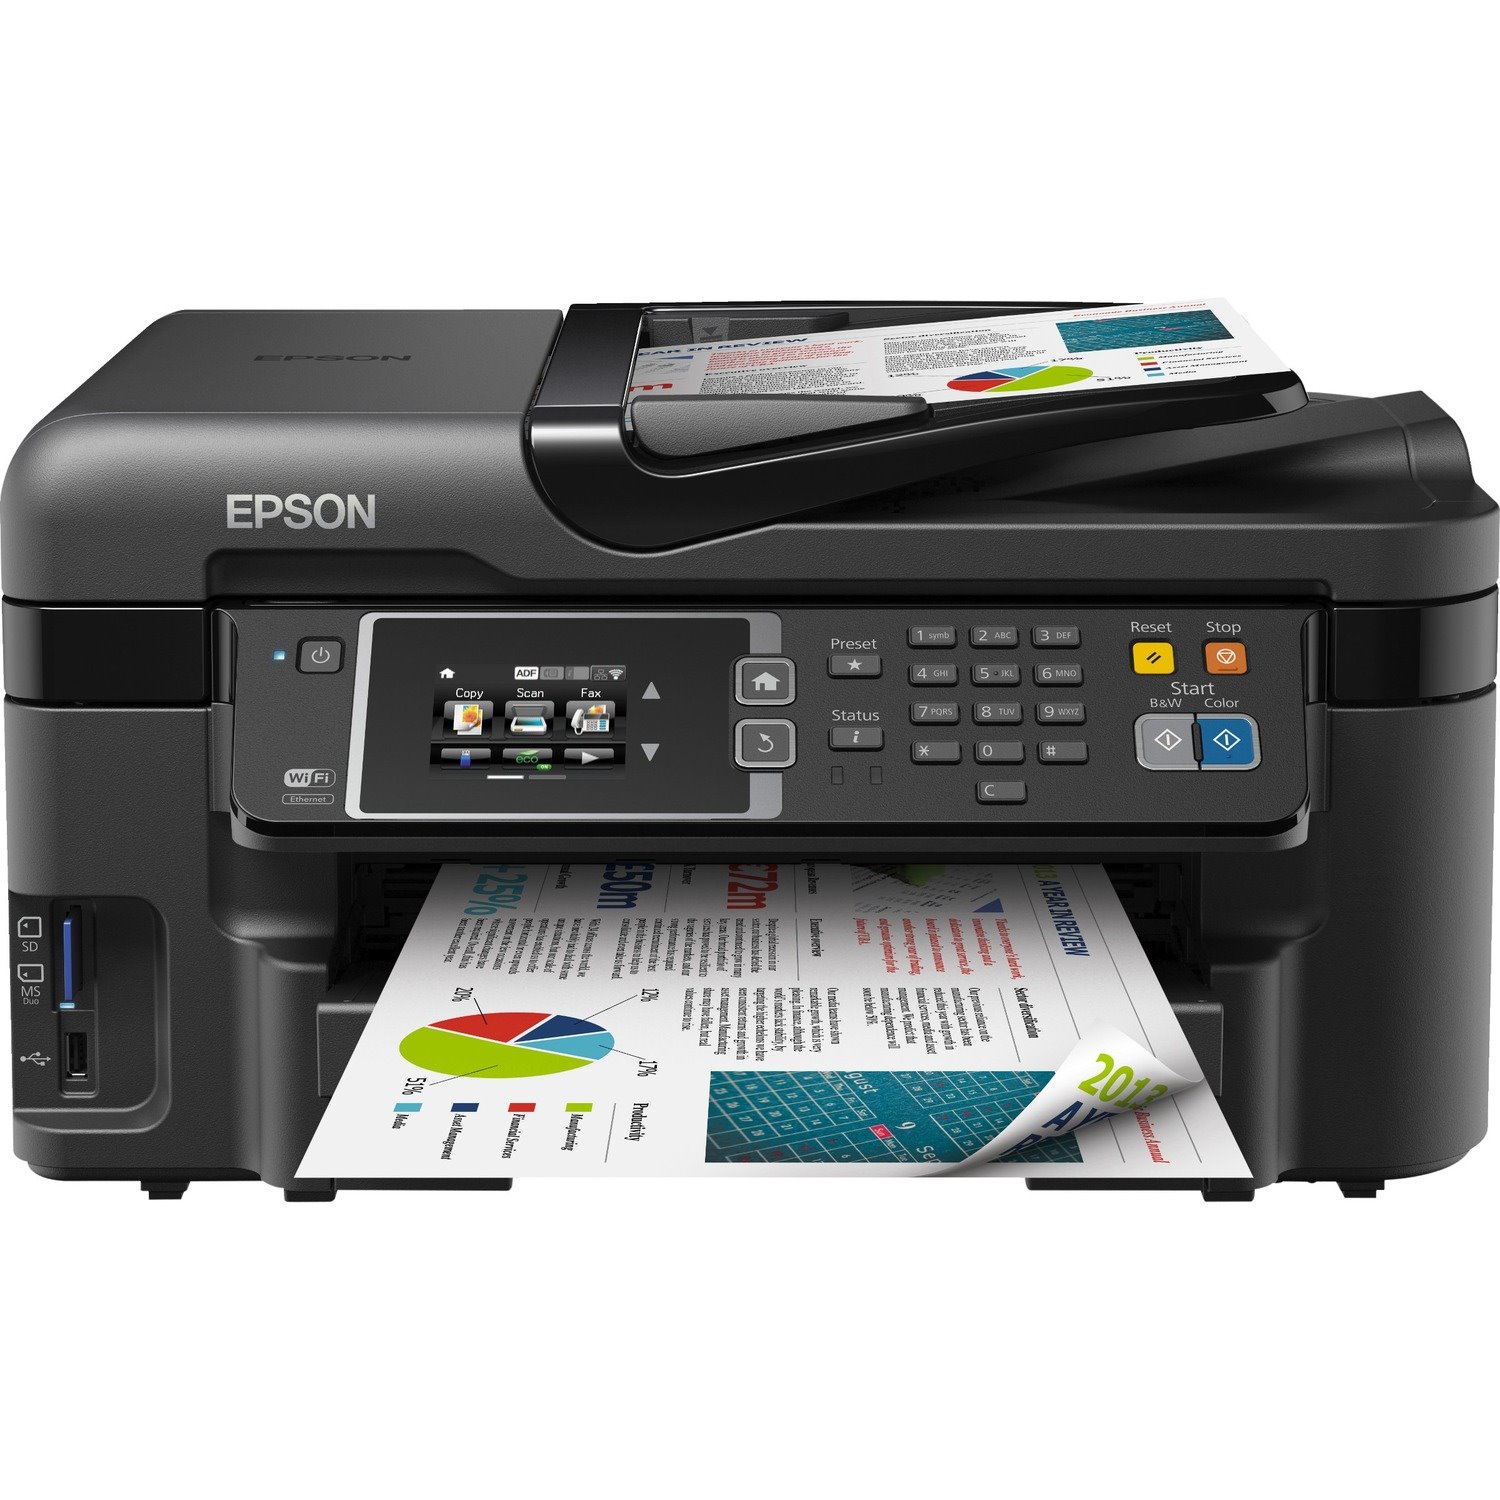 Epson WorkForce WF-3620 Wireless Inkjet Multifunction Printer - Colour